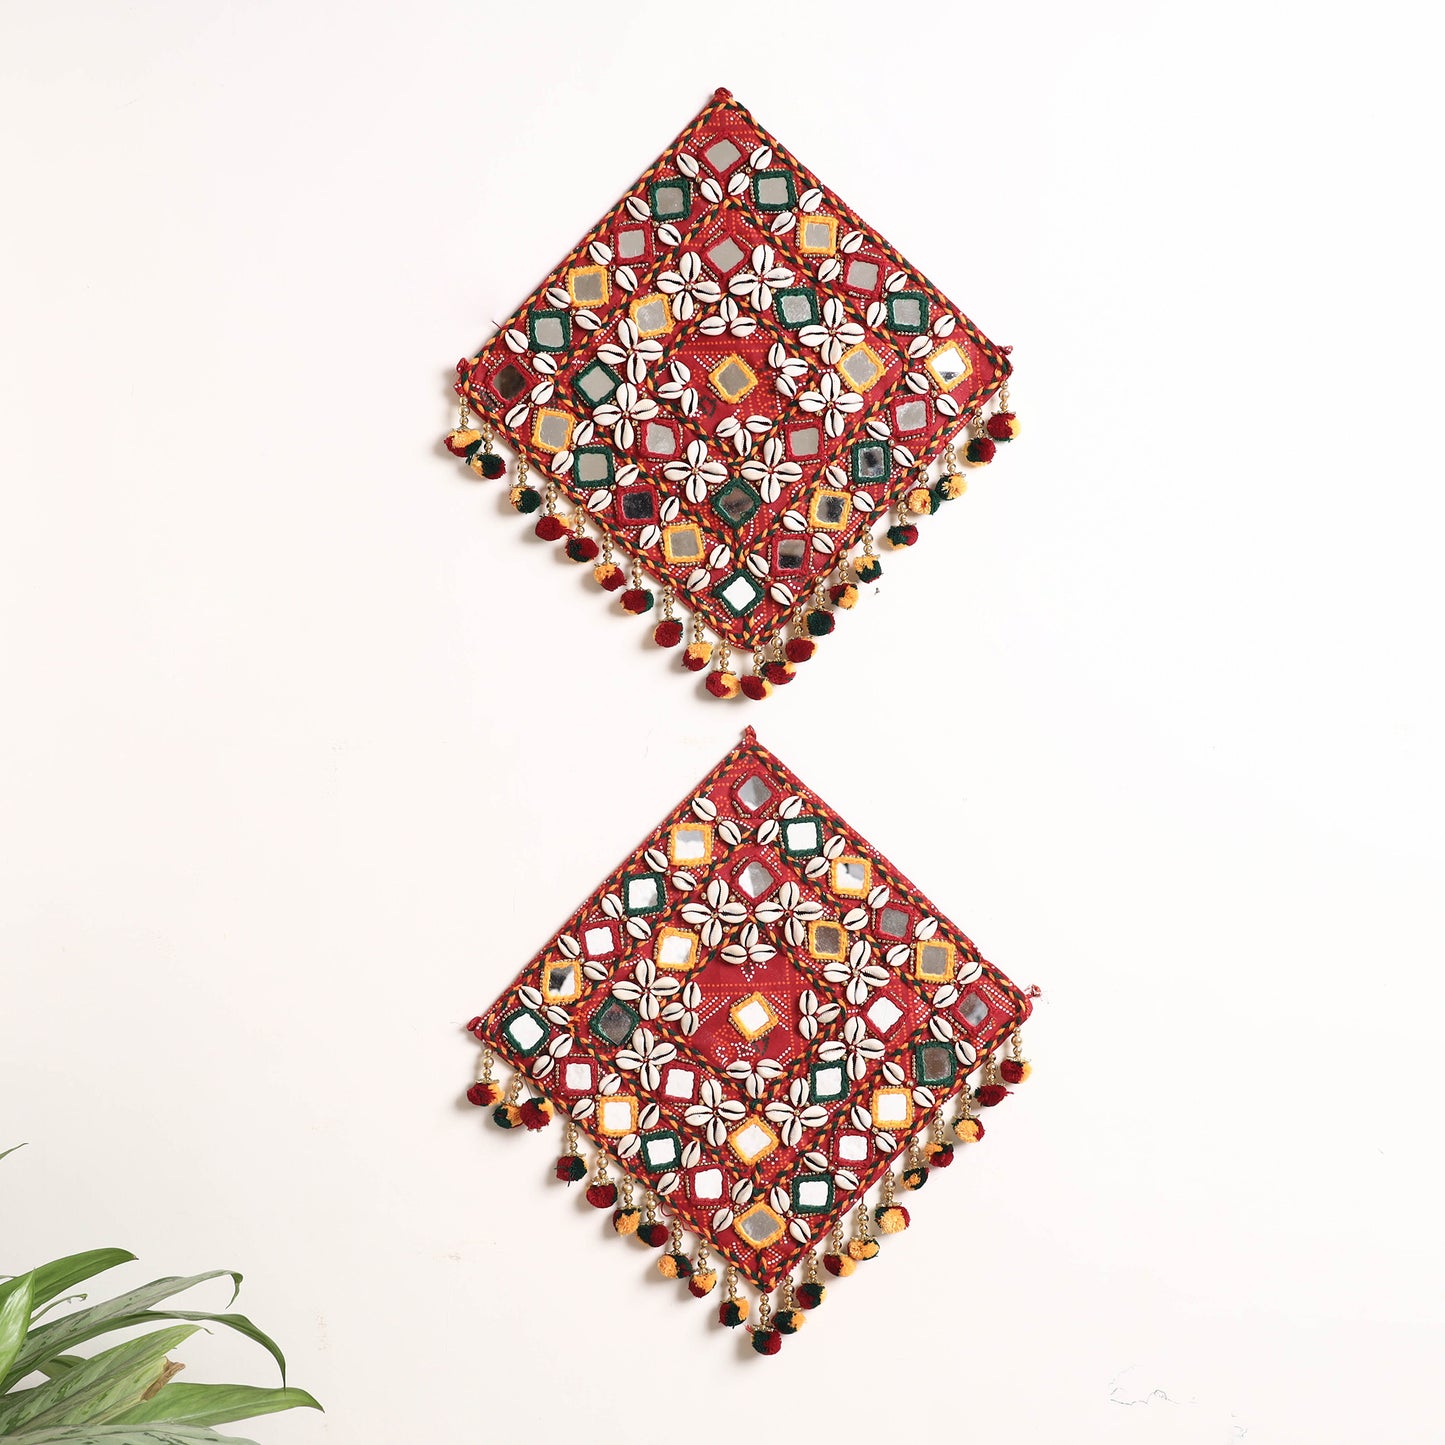 Kutch Hand Embroidery Mirror & Kodi Work Beaded Hangings (Set of 2 - 12 x 12 in)